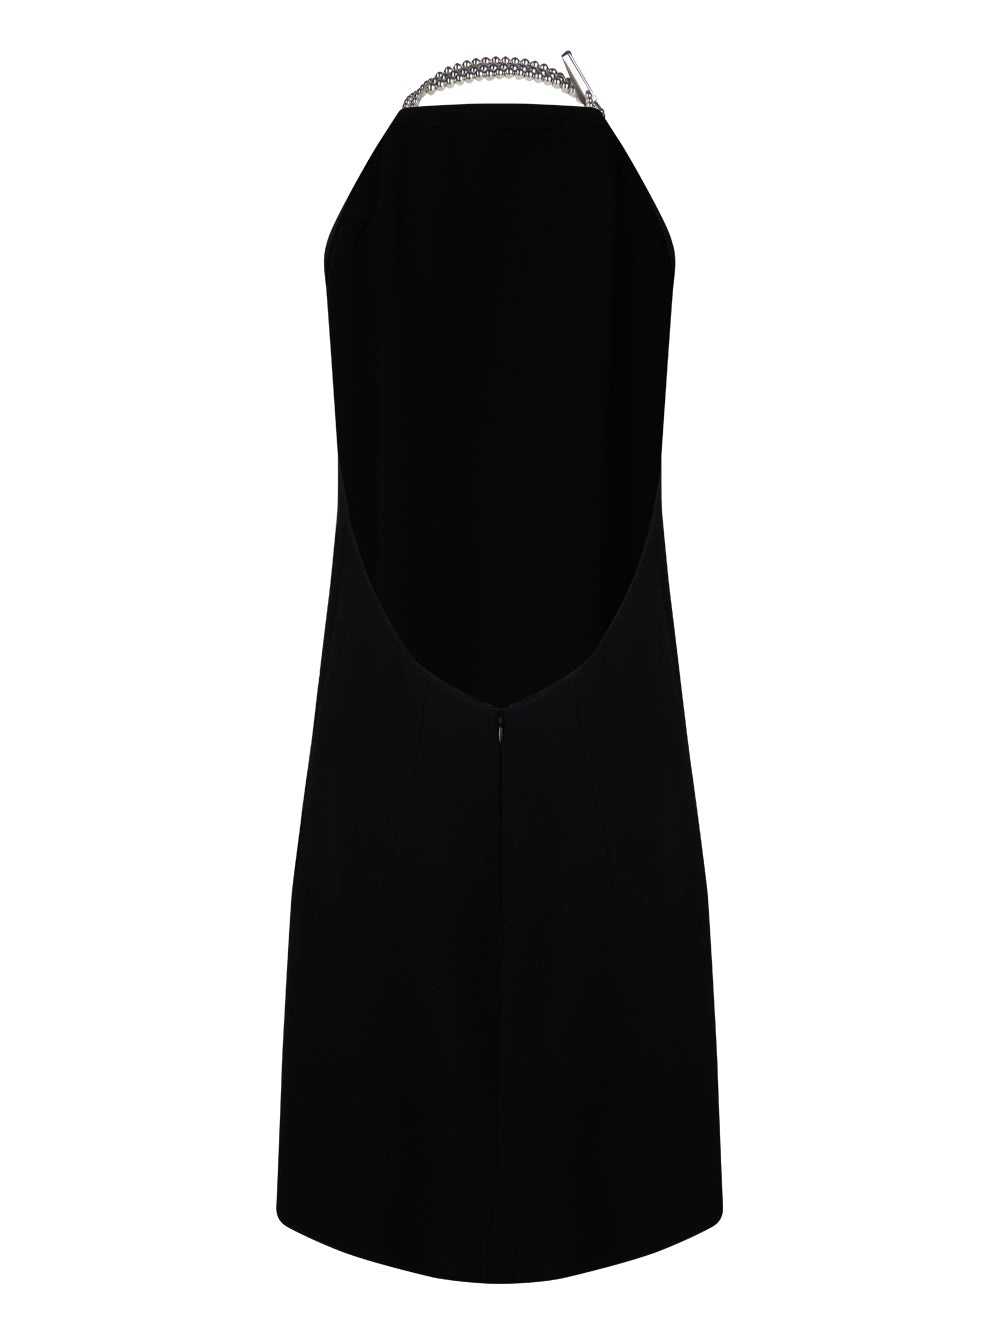 PRADA BLACK SUIT DRESS - 4